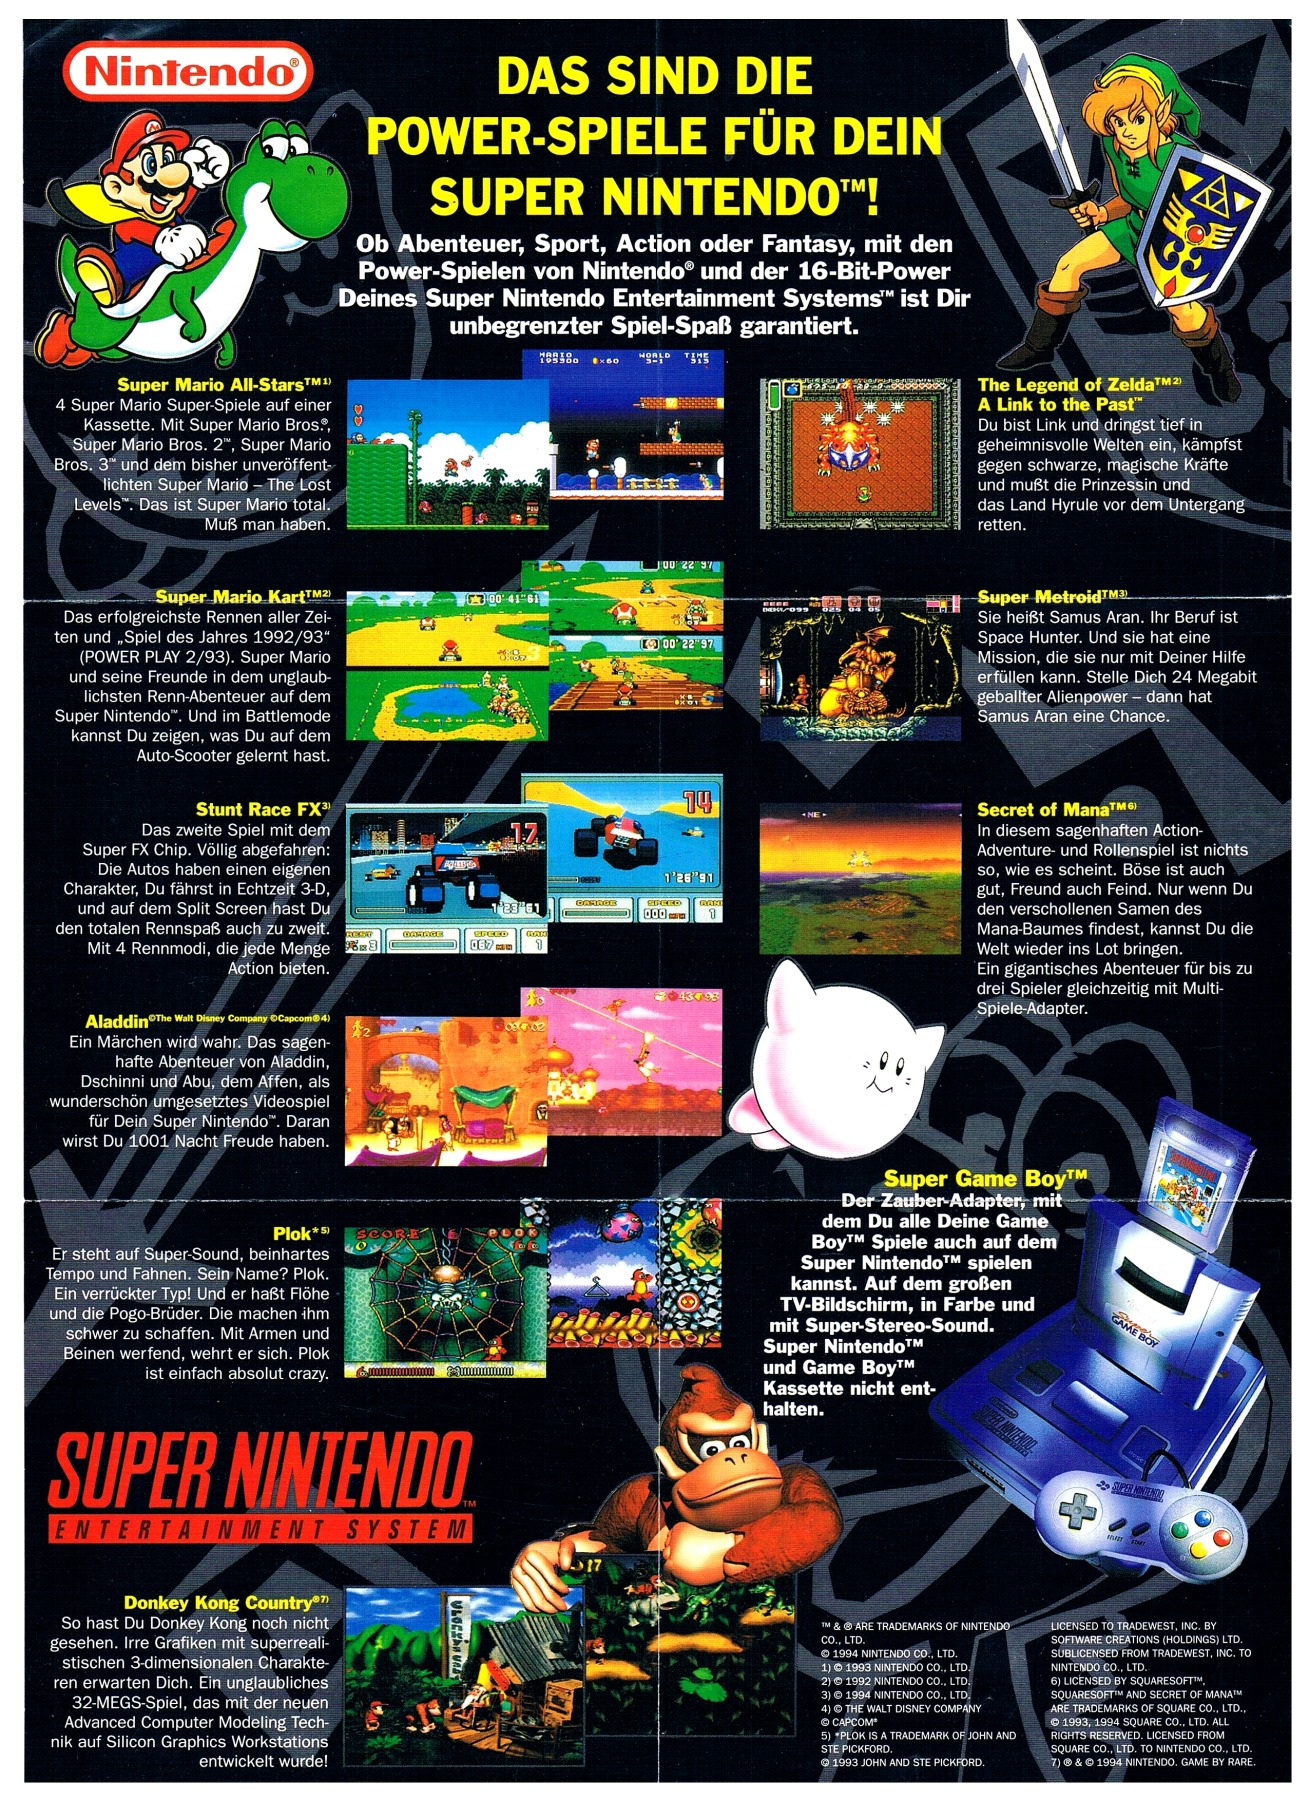 Nintendo Game Boy / SNES Super NES Promotional flyer 2